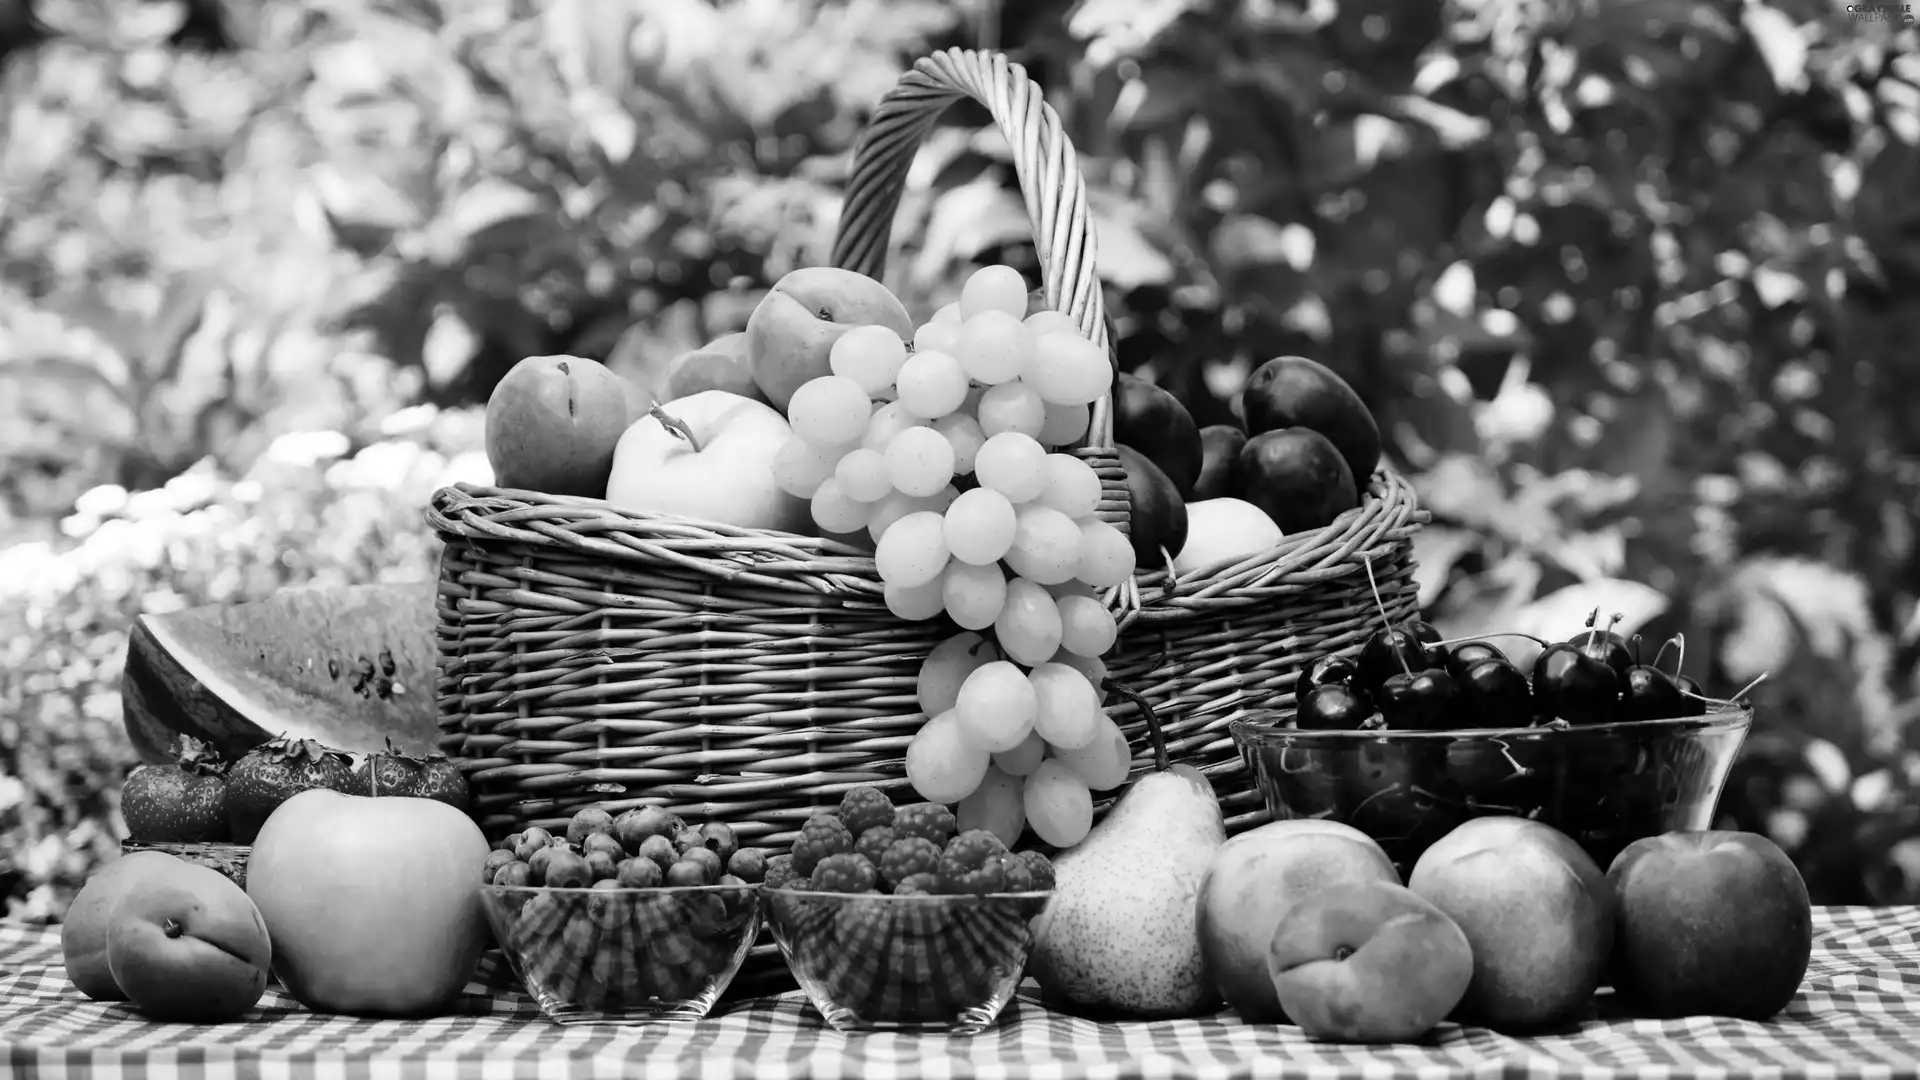 Garden, Fruits, basket